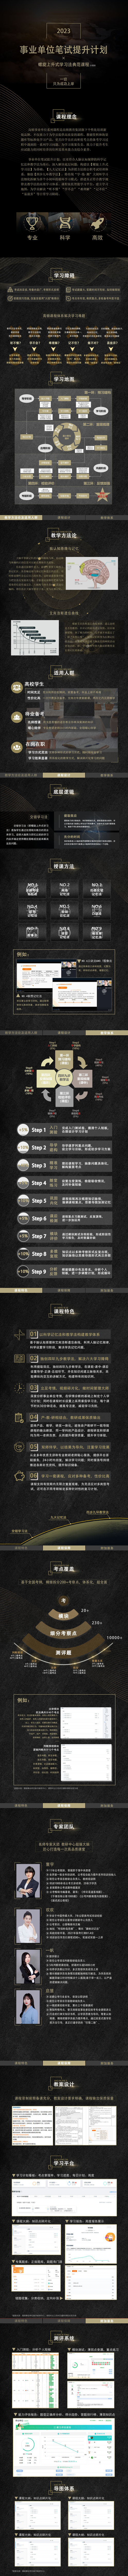 https://simg01.gaodunwangxiao.com/uploadfiles/product-center/202309/06/a9e13_20230906153851.jpg